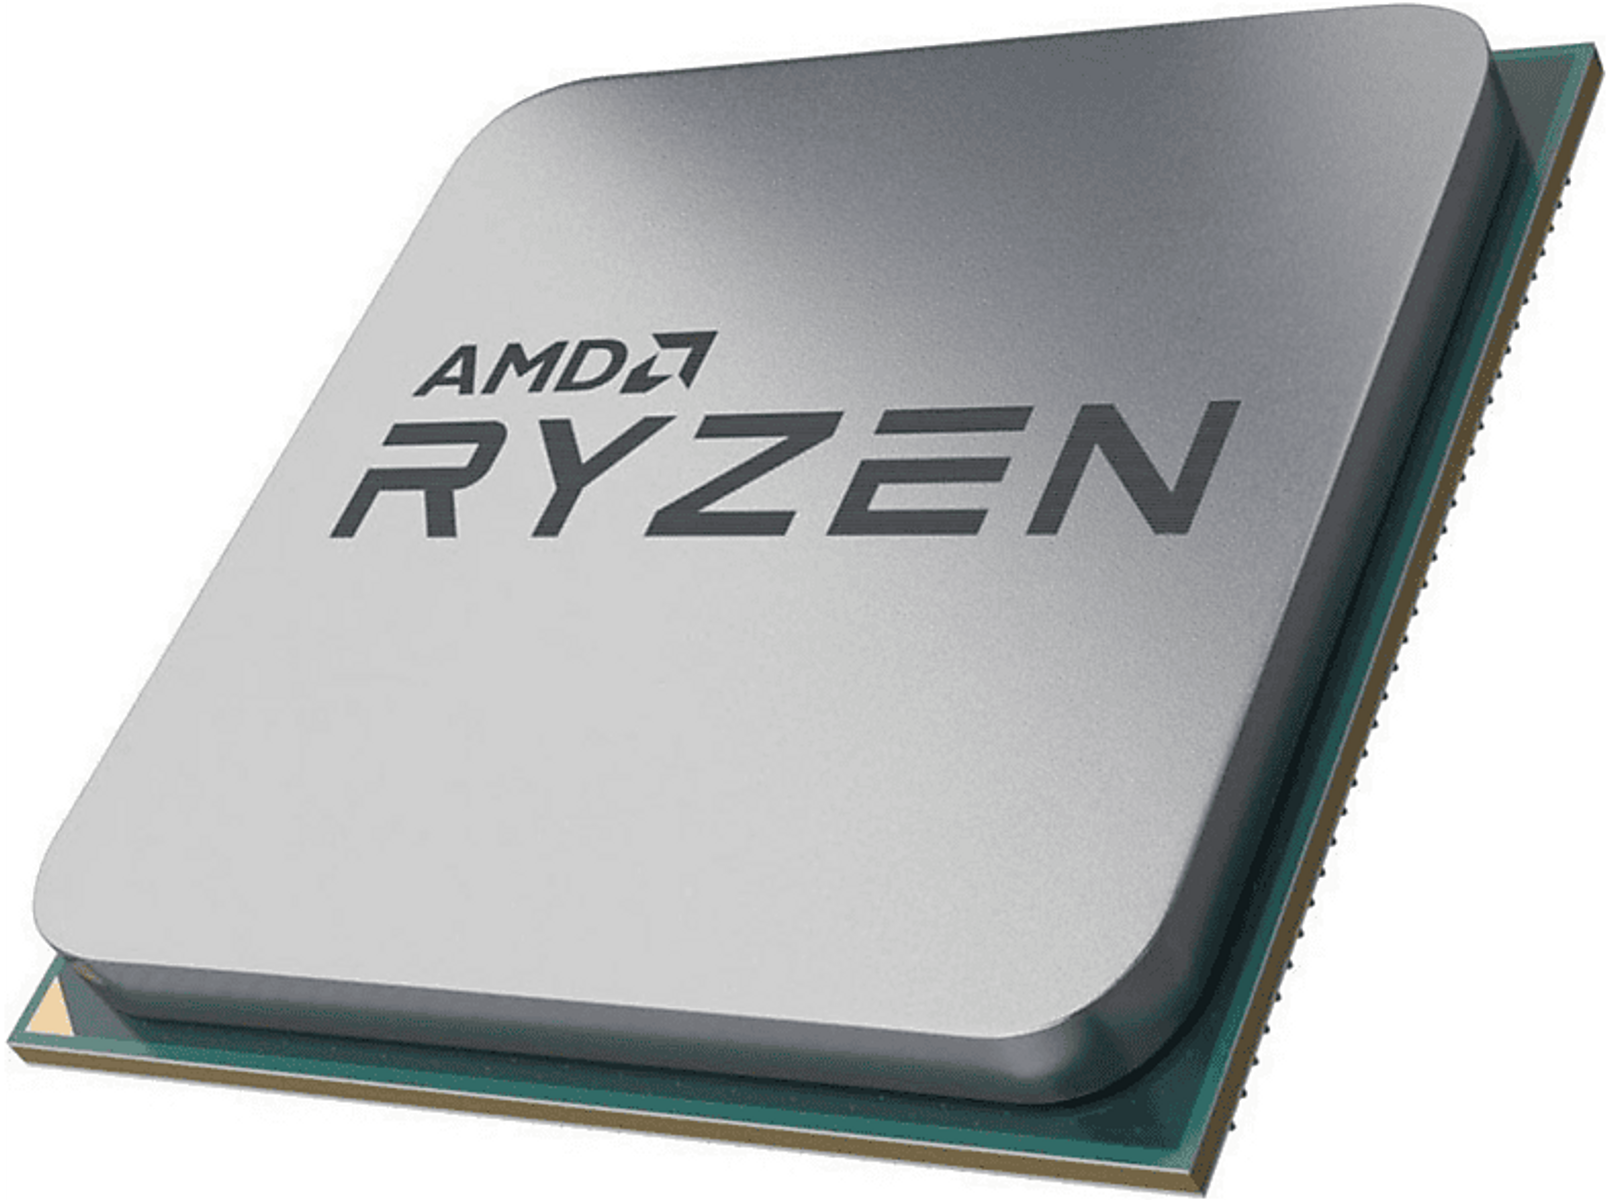 AMD 4100 Prozessor Boxed-Kühler, Mehrfarbig mit